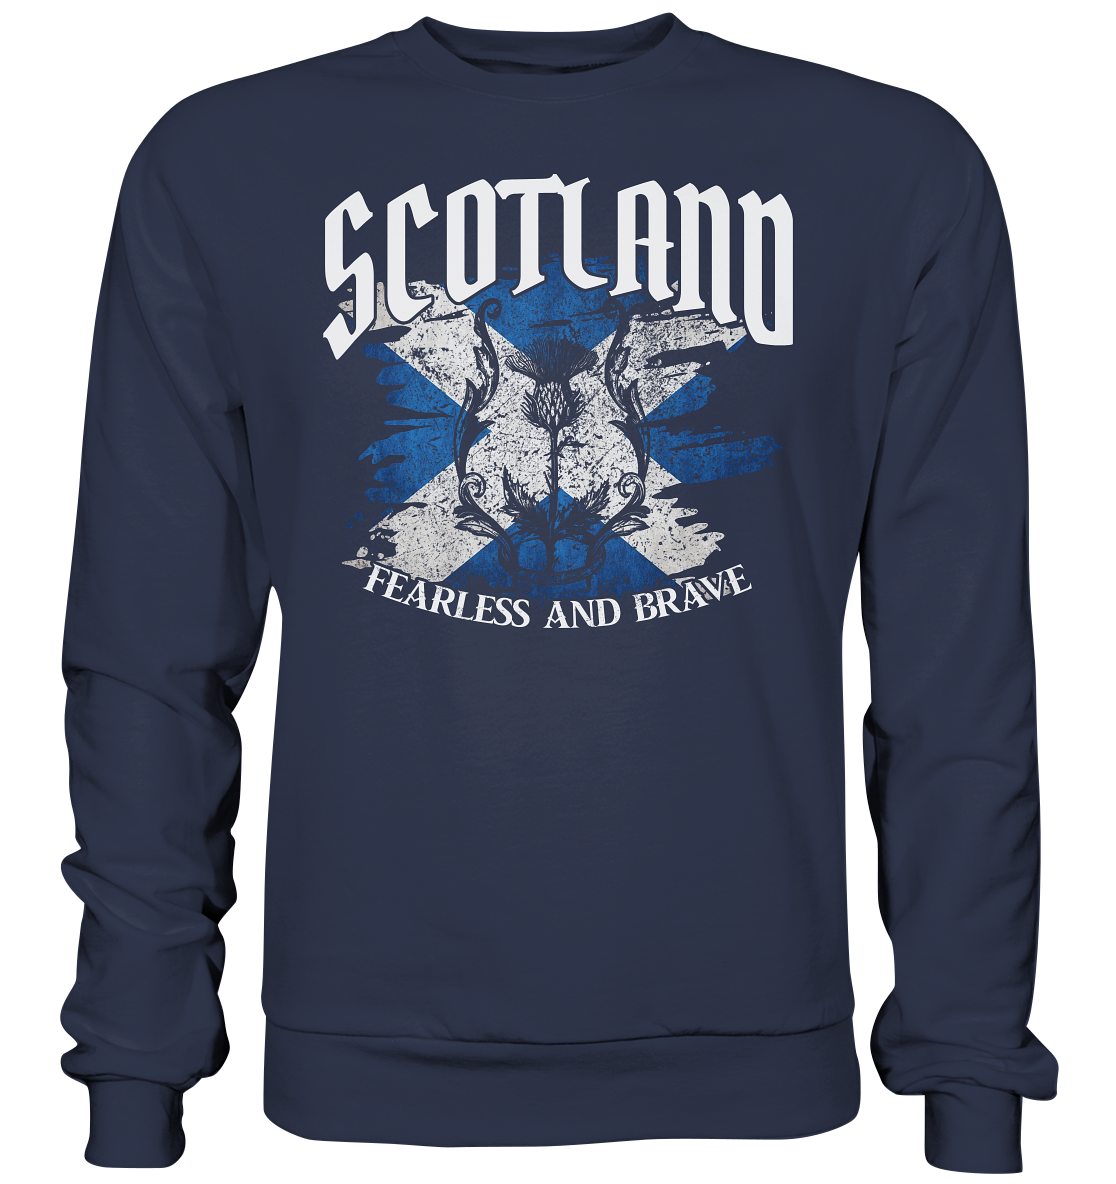 Scotland "Fearless and Brave / Splatter" - Premium Sweatshirt